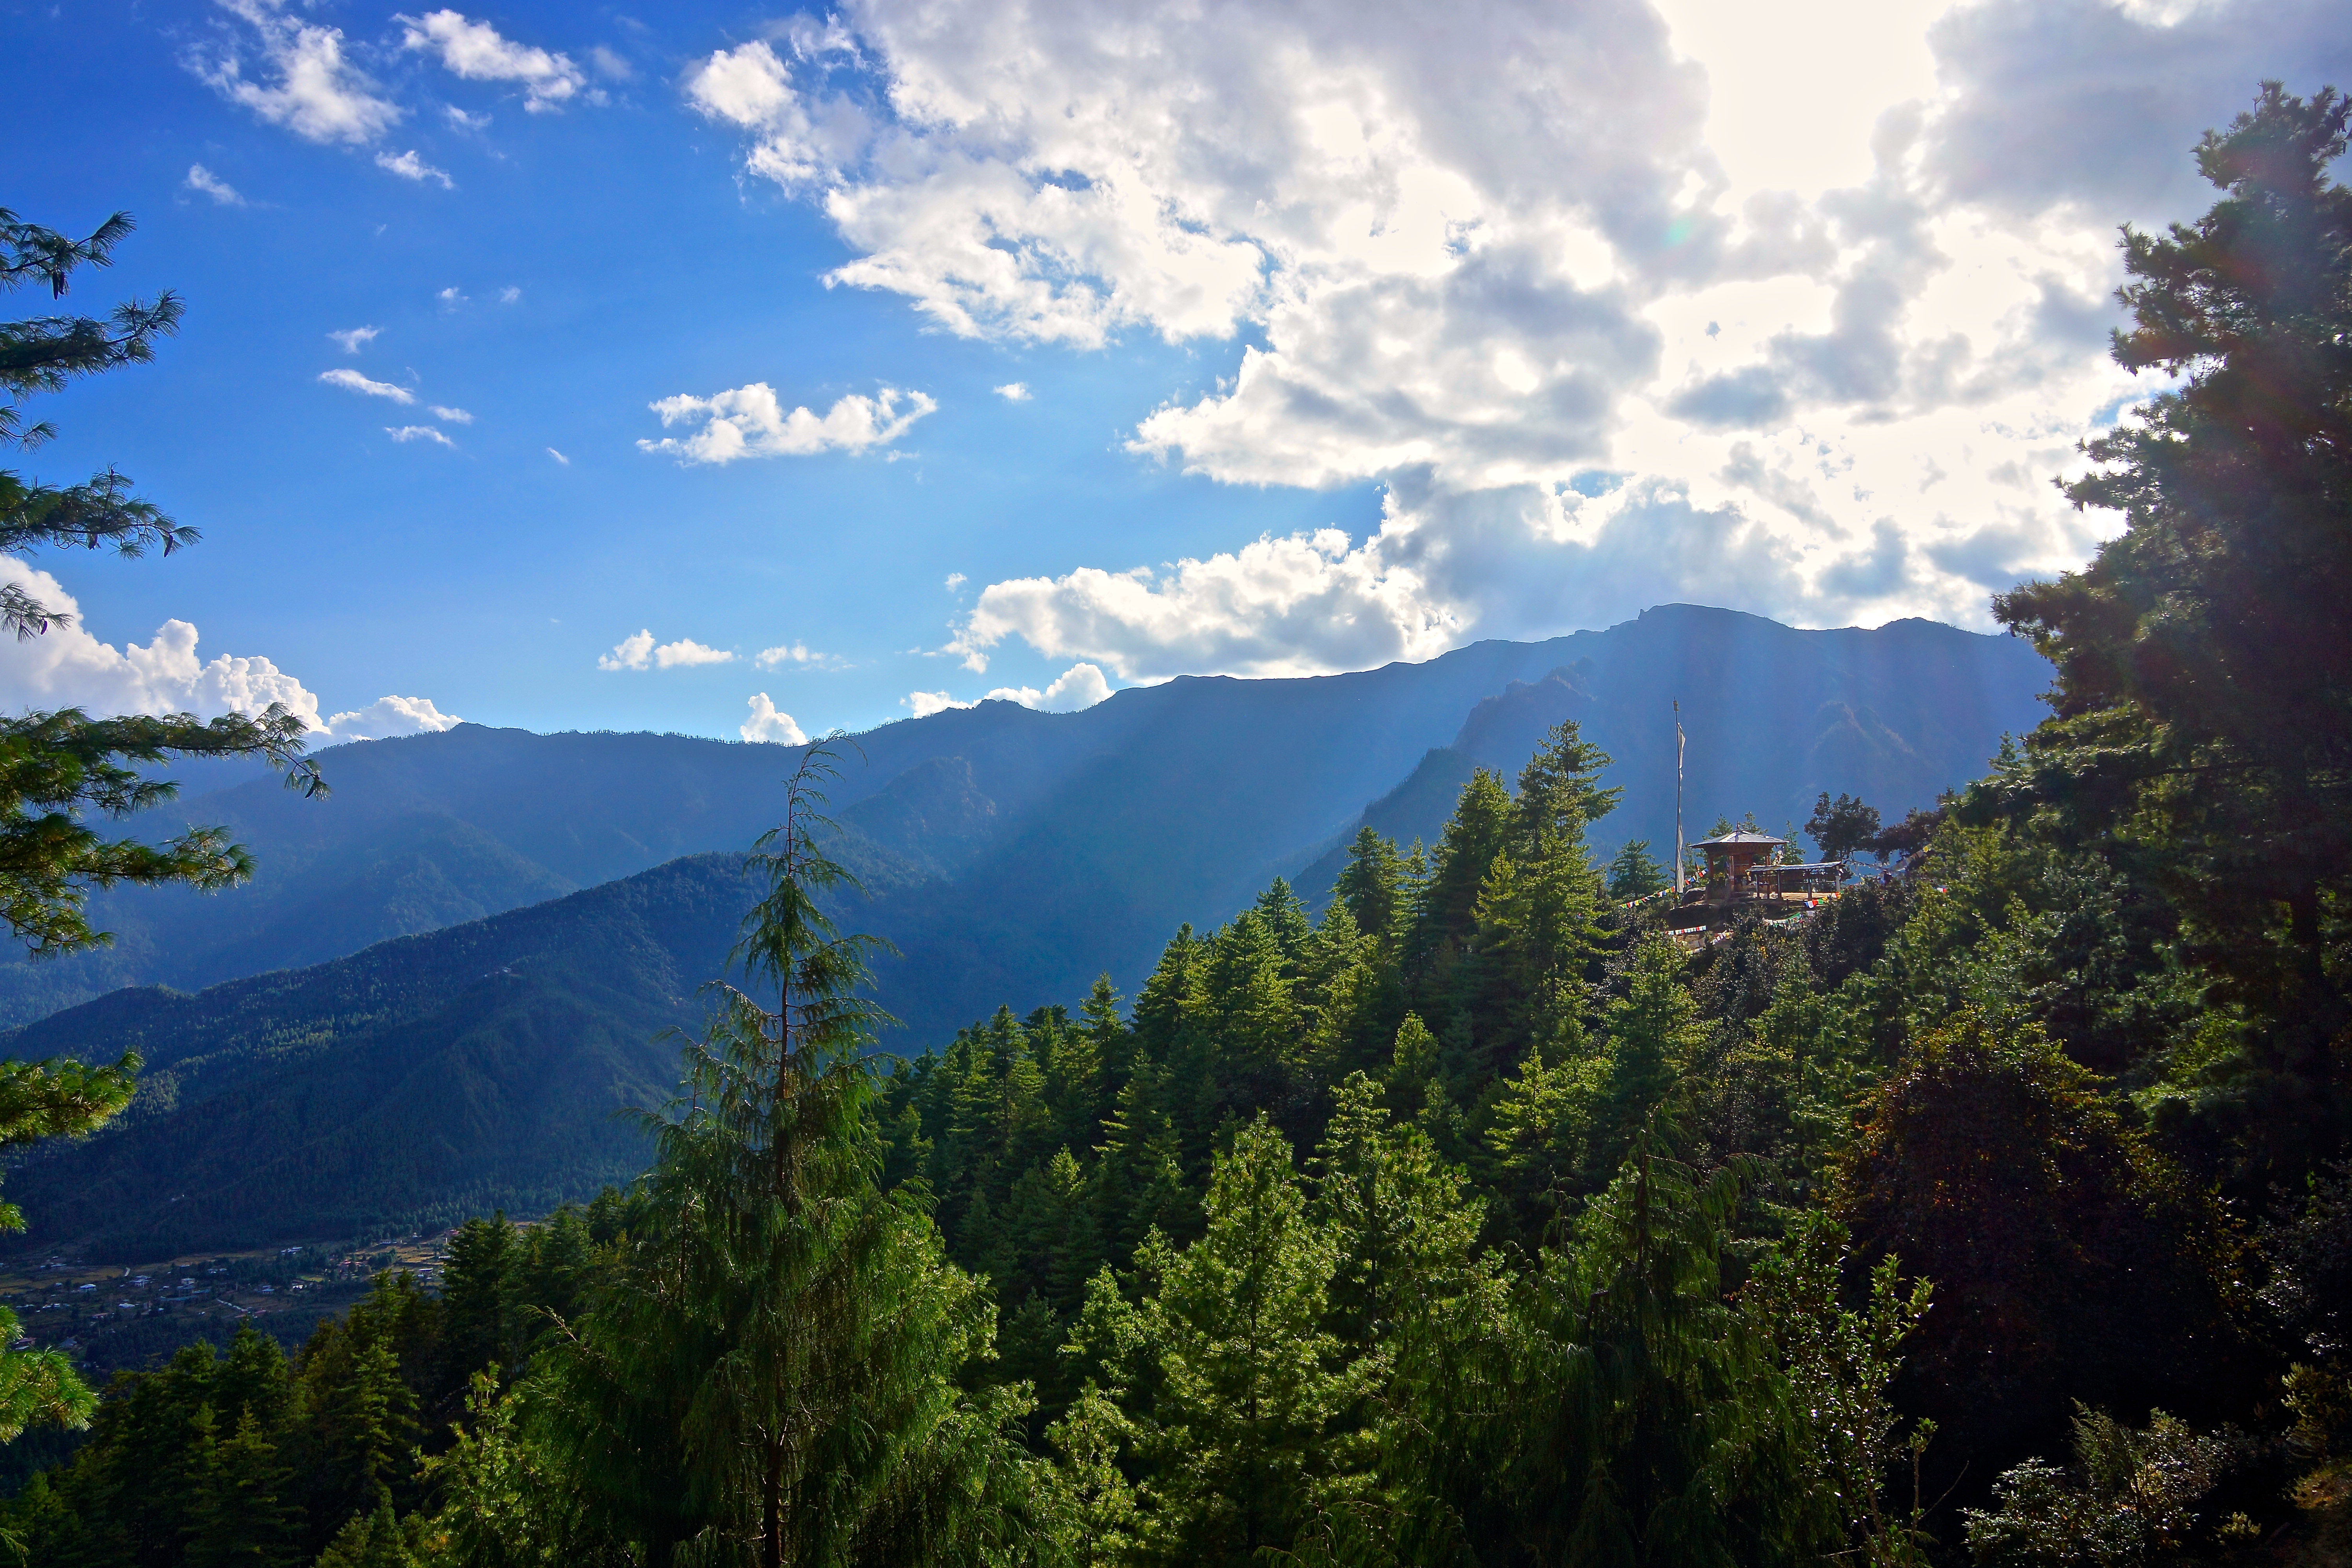 Bhutan Forest via Dropbox